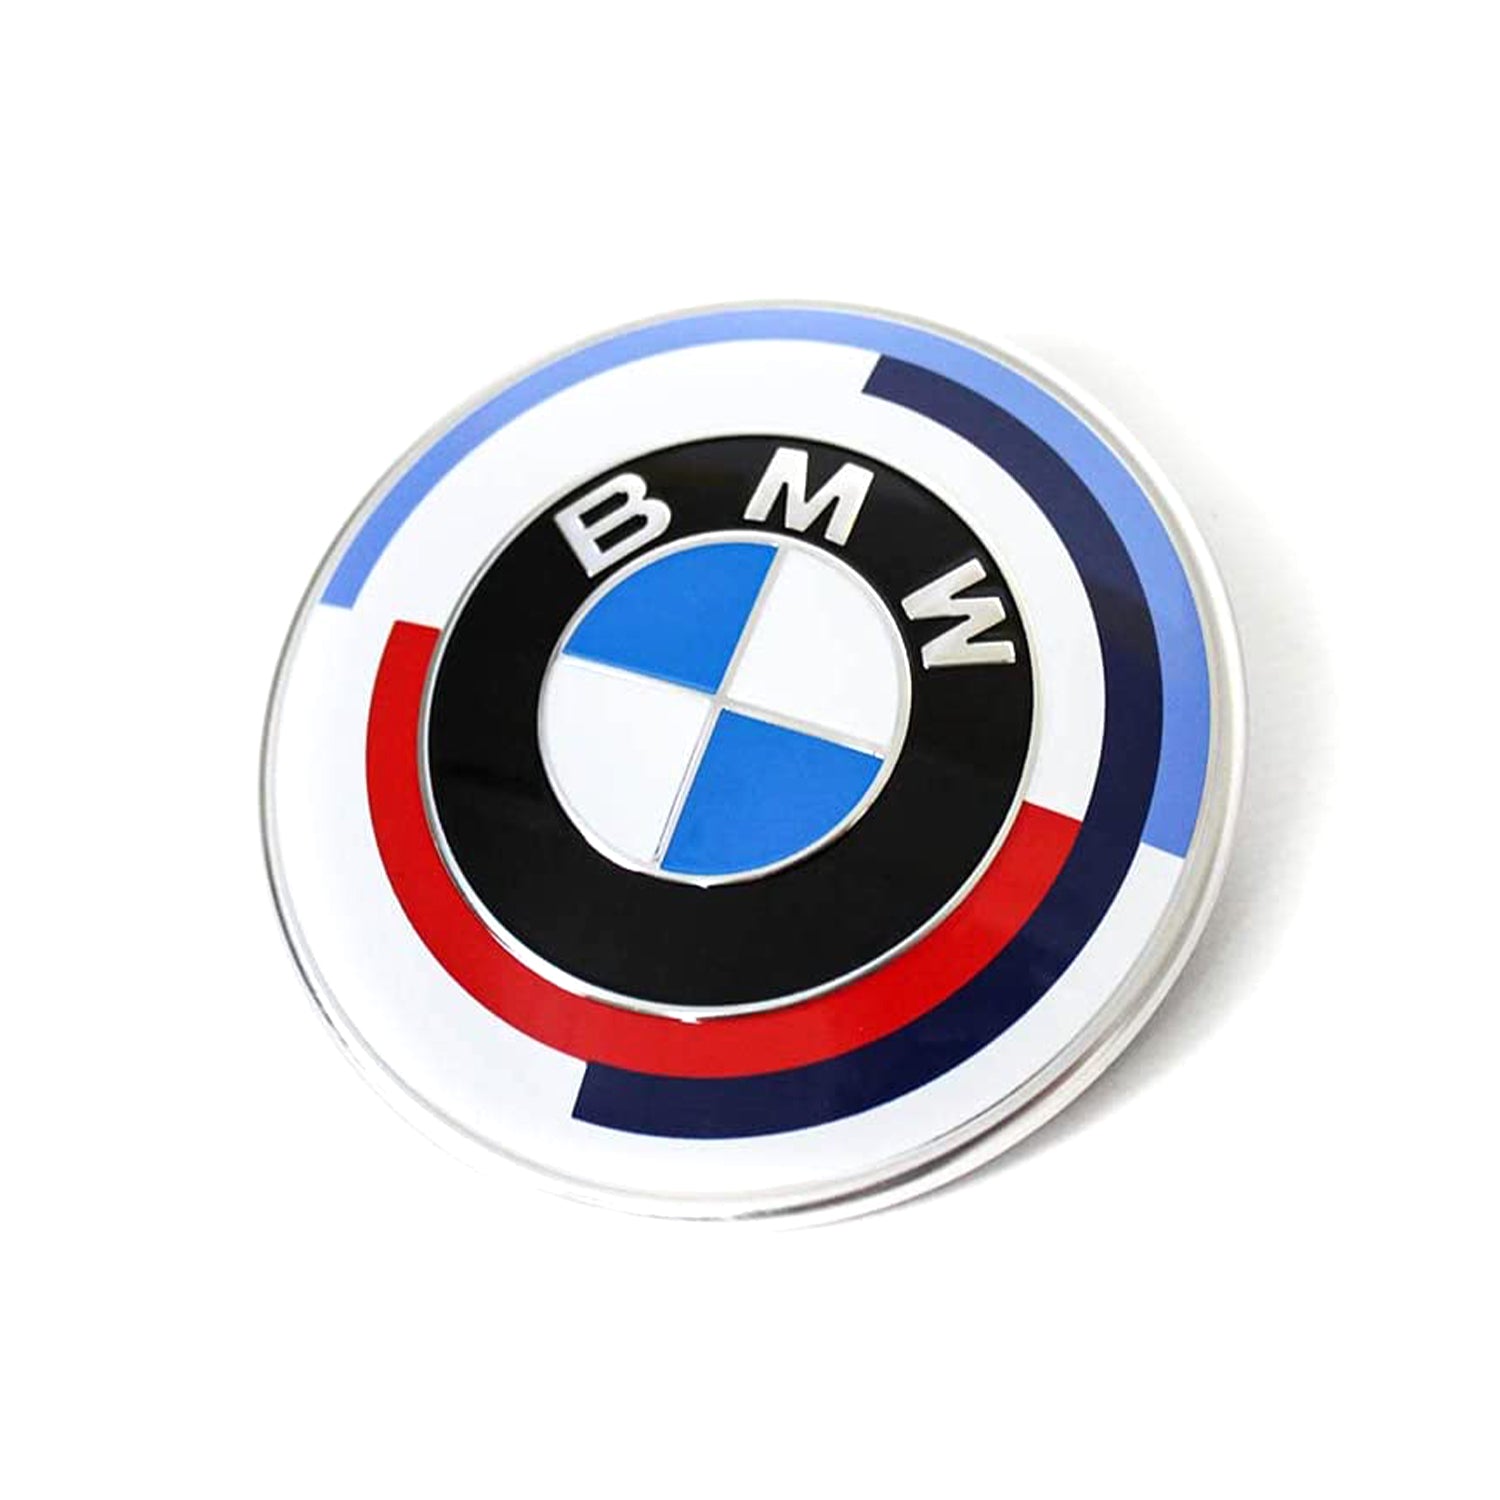 Genuine BMW E46 M3 50 Year Anniversary Heritage Front Badge